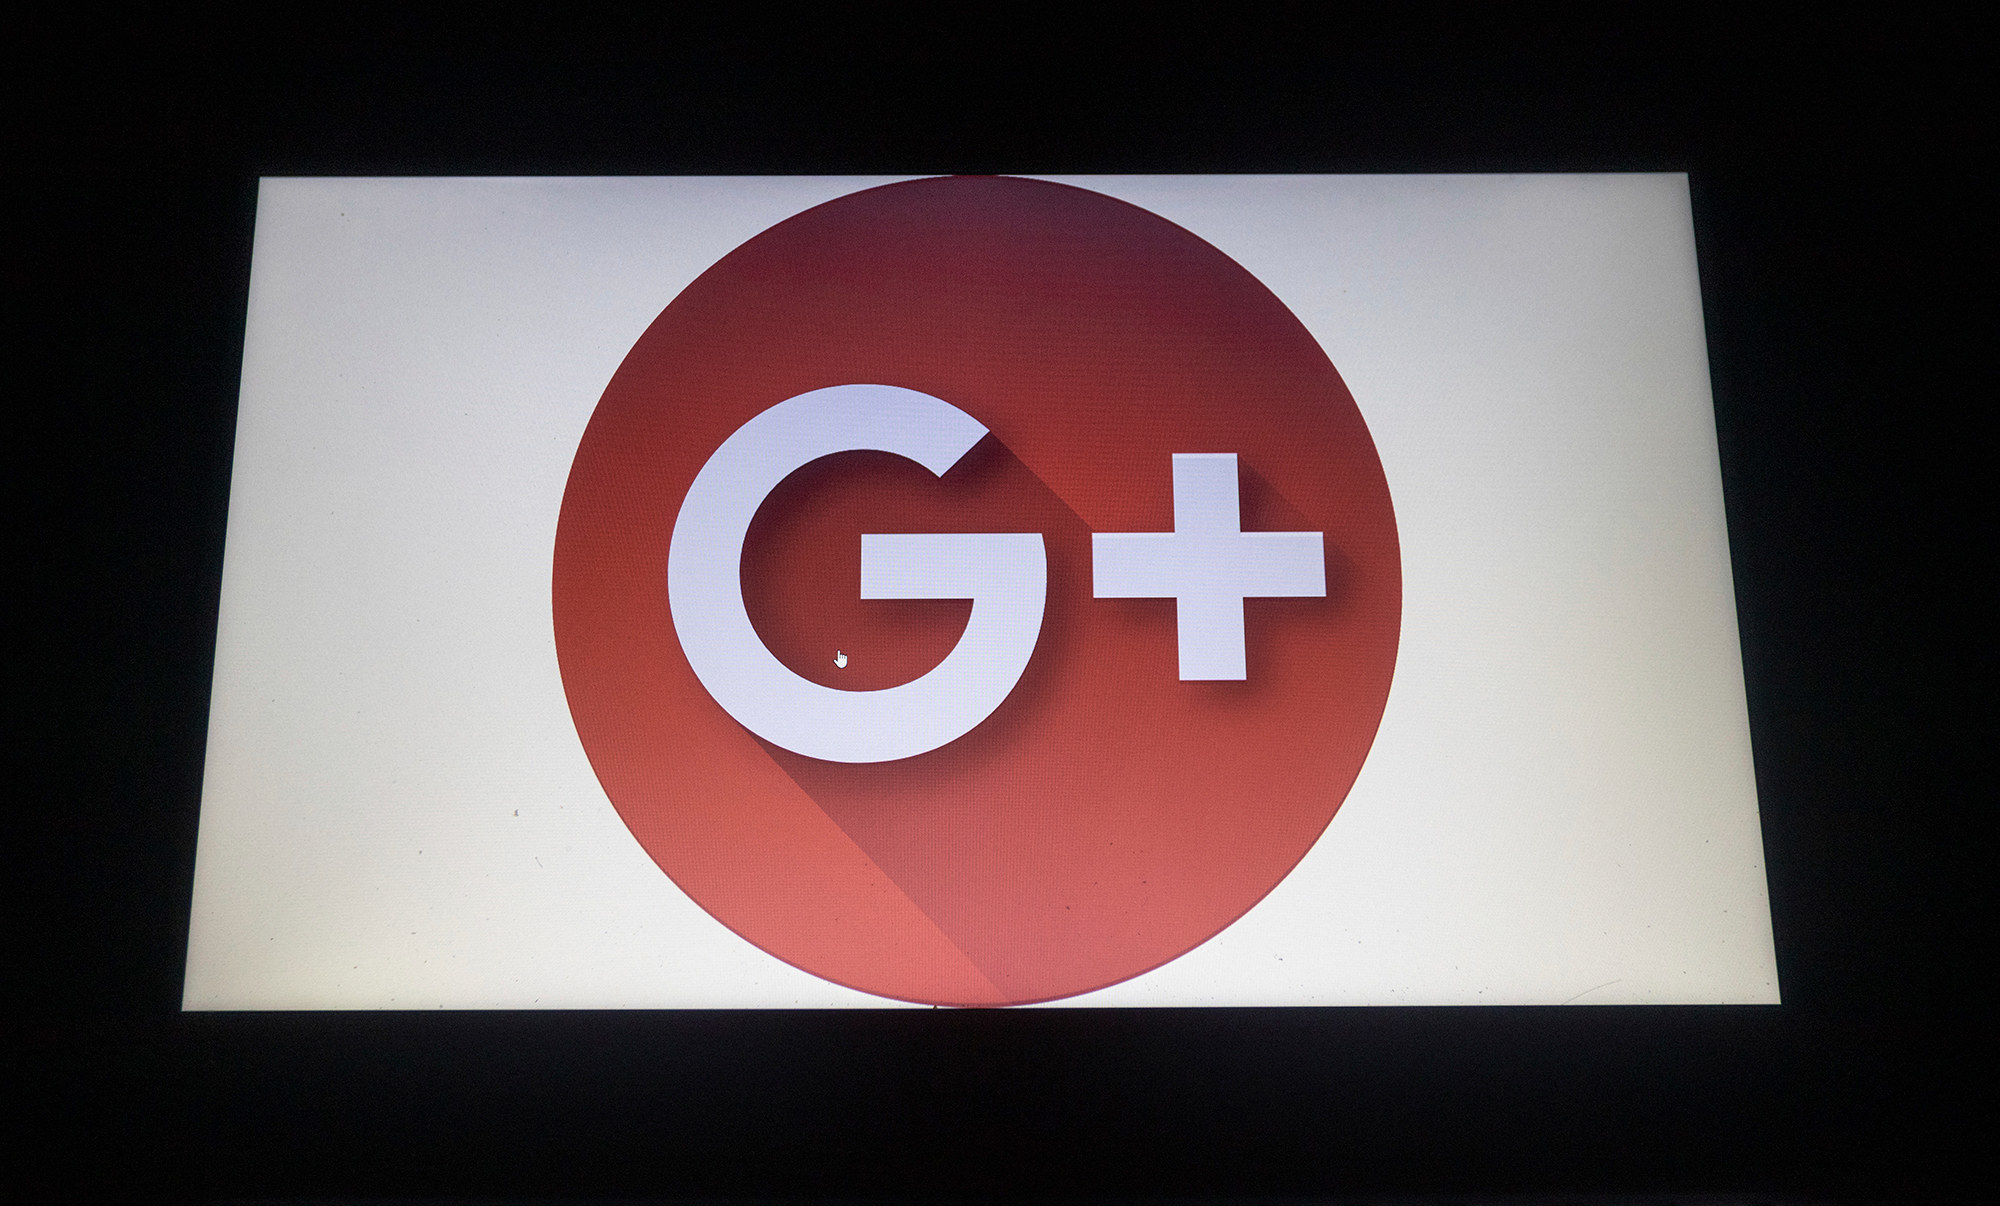 The Google Plus logo